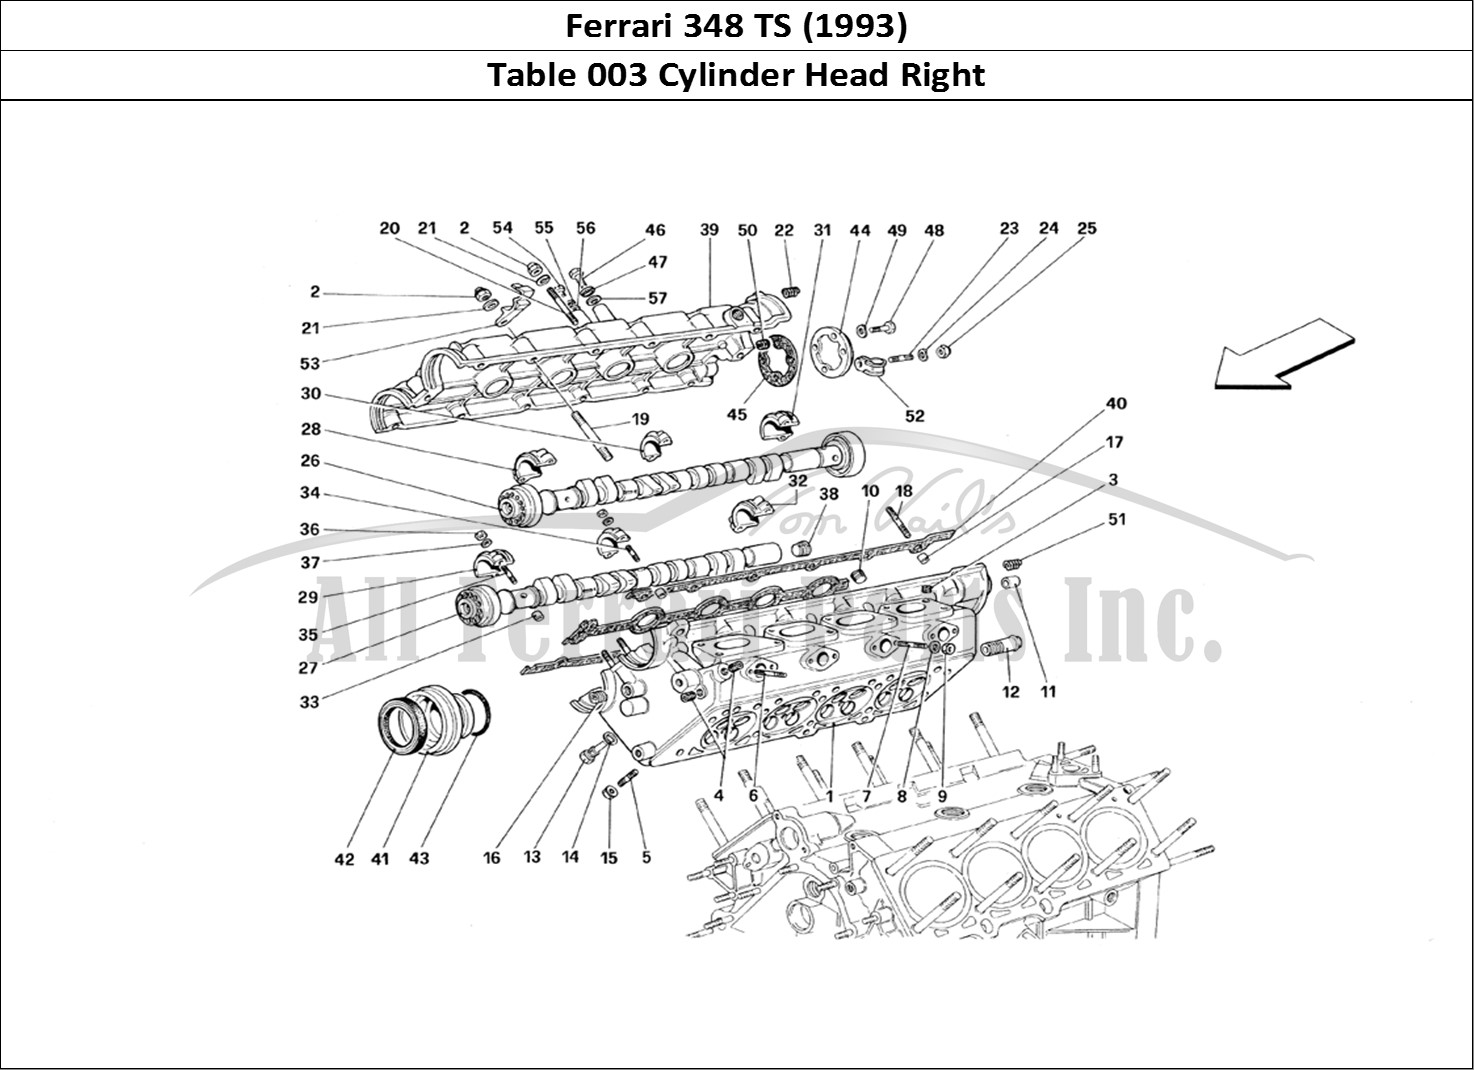 Ferrari Parts Ferrari 348 TB (1993) Page 003 R.H. Cylinder Head